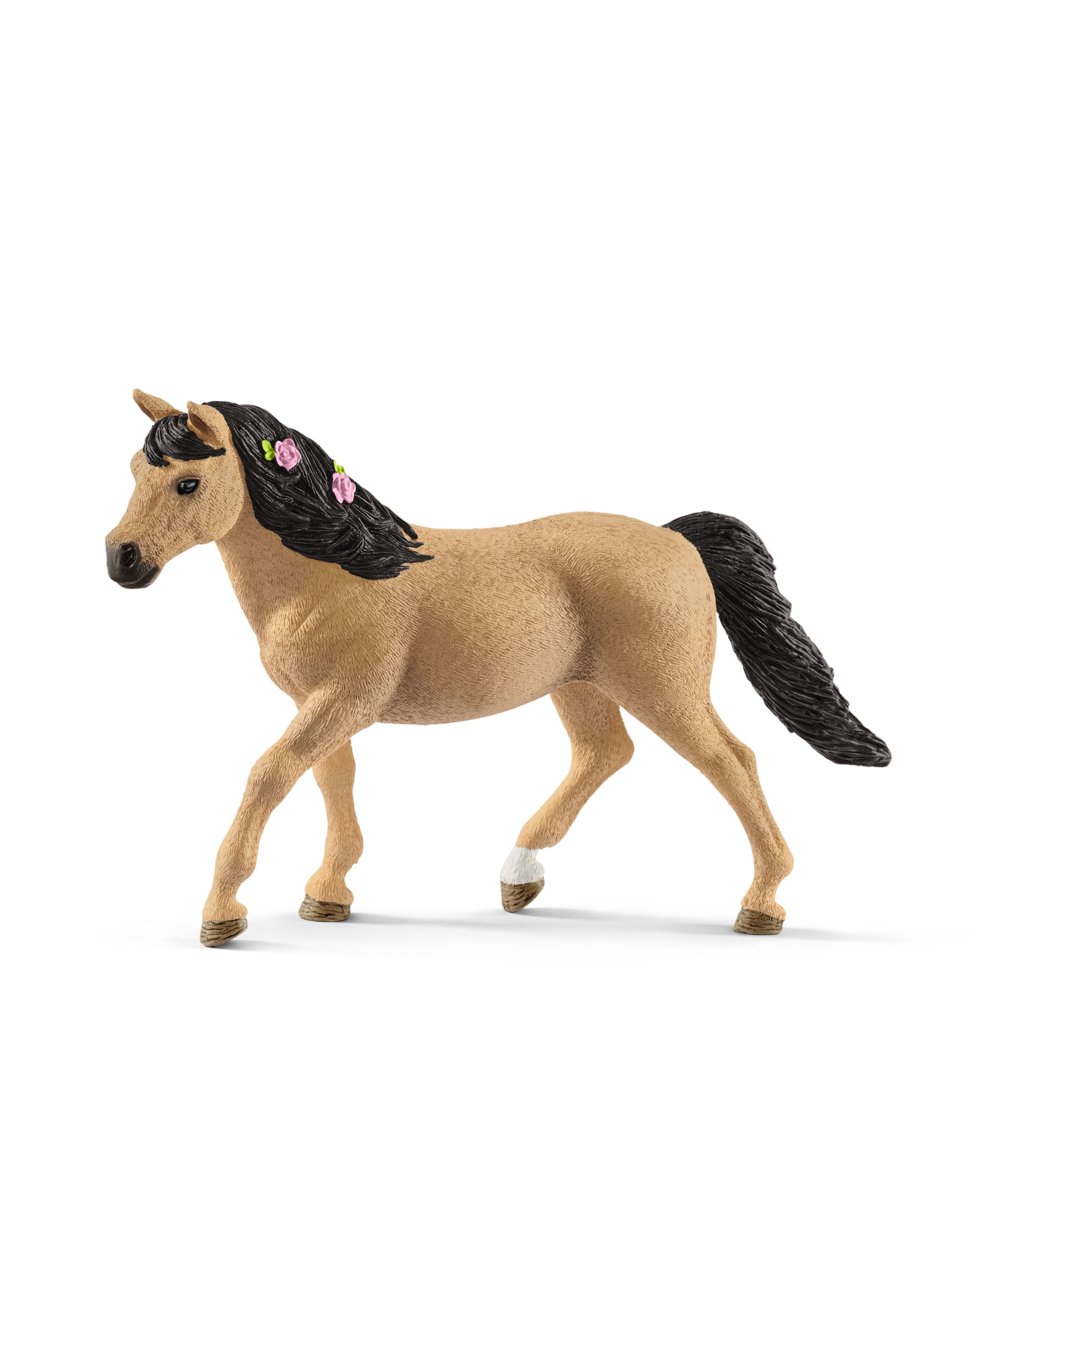 Tierfigur Connemara Pony Stute